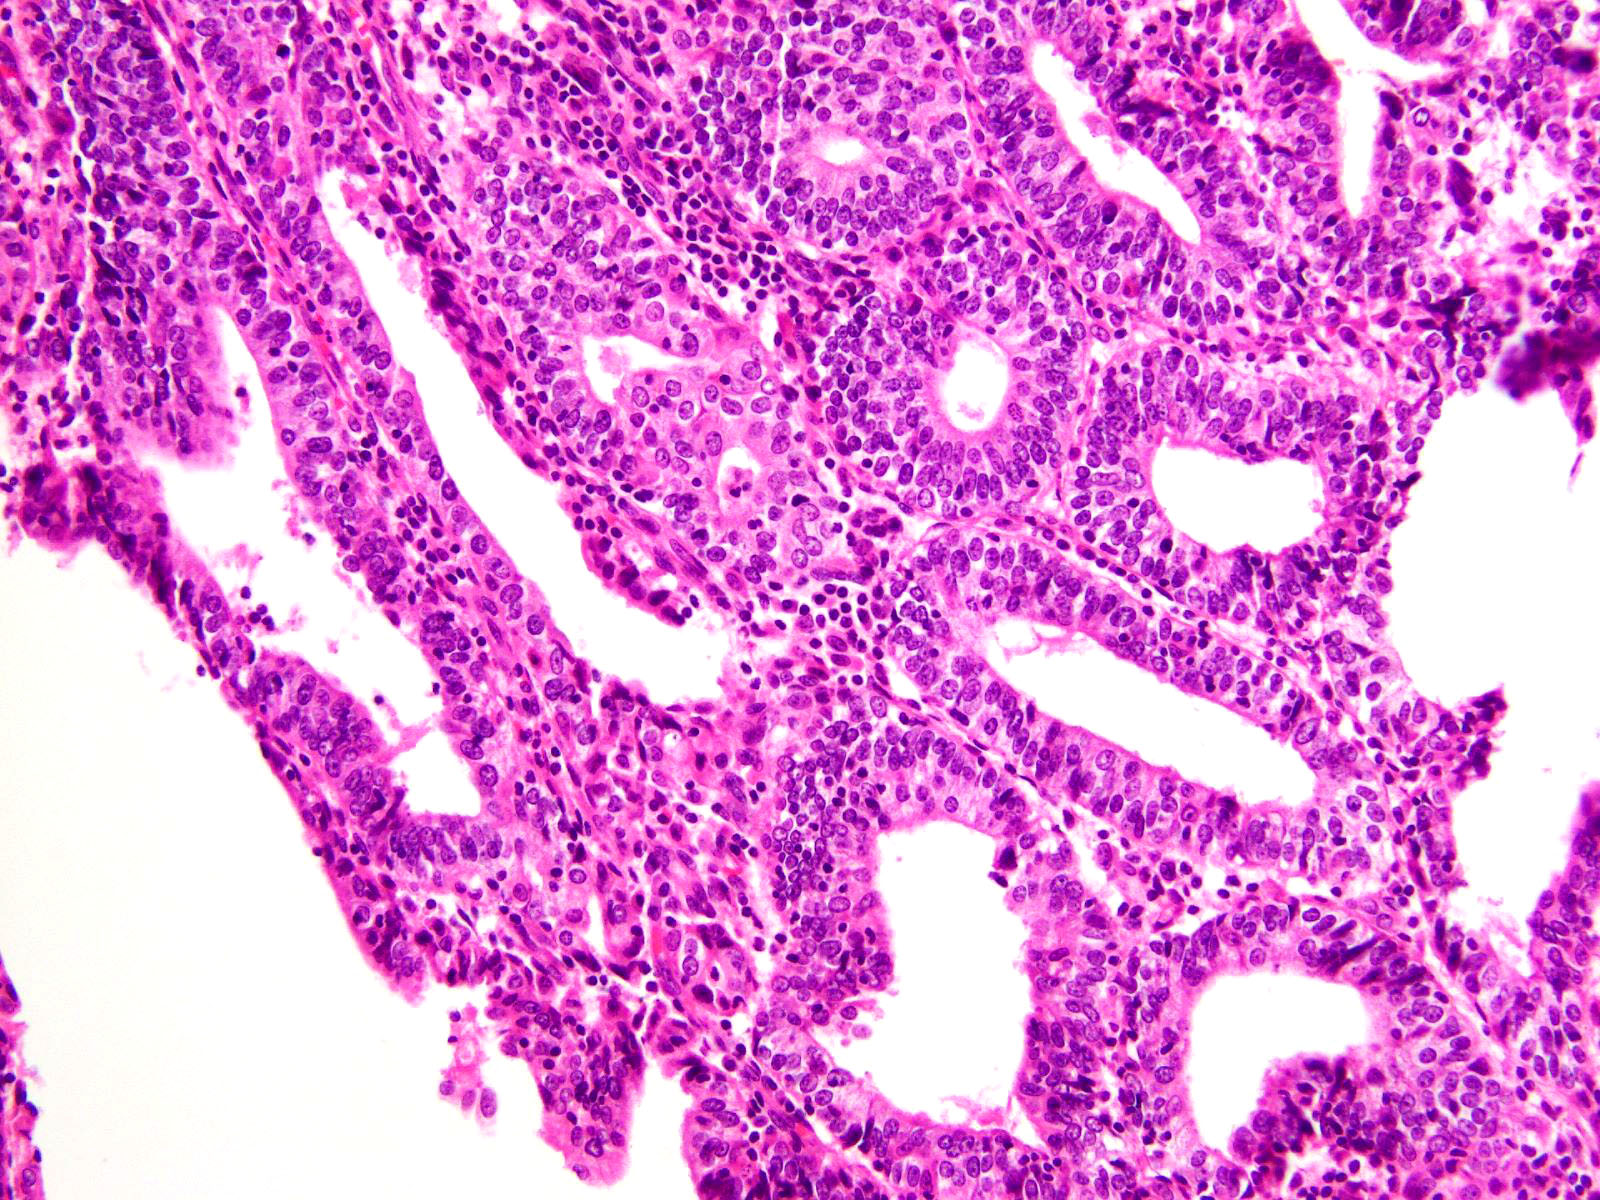 Tumor infiltrating lymphocytes